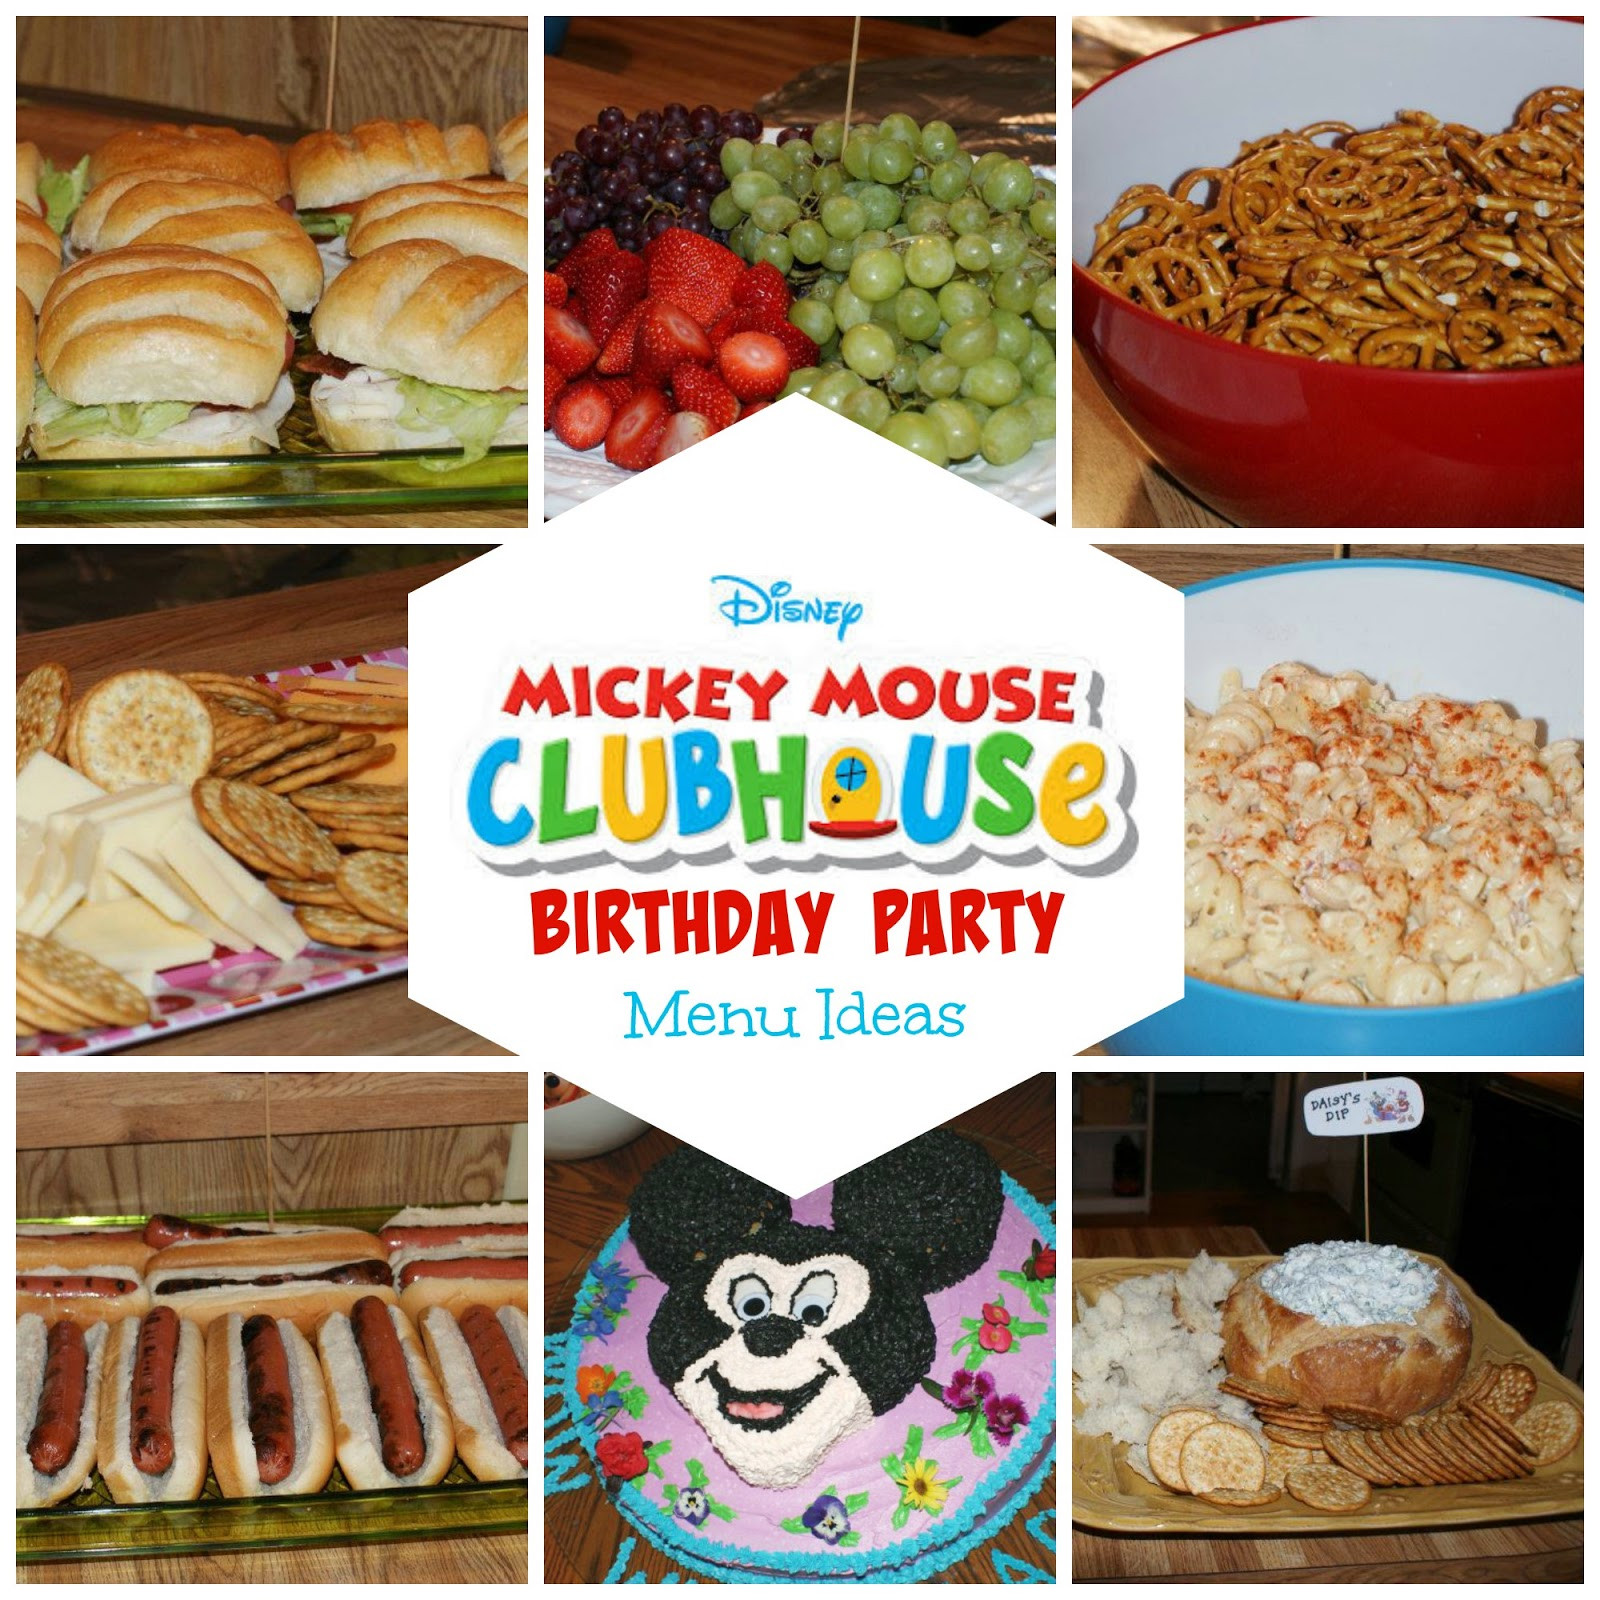 Birthday Party Menu Ideas
 8 Mickey Mouse Birthday Party Menu Ideas